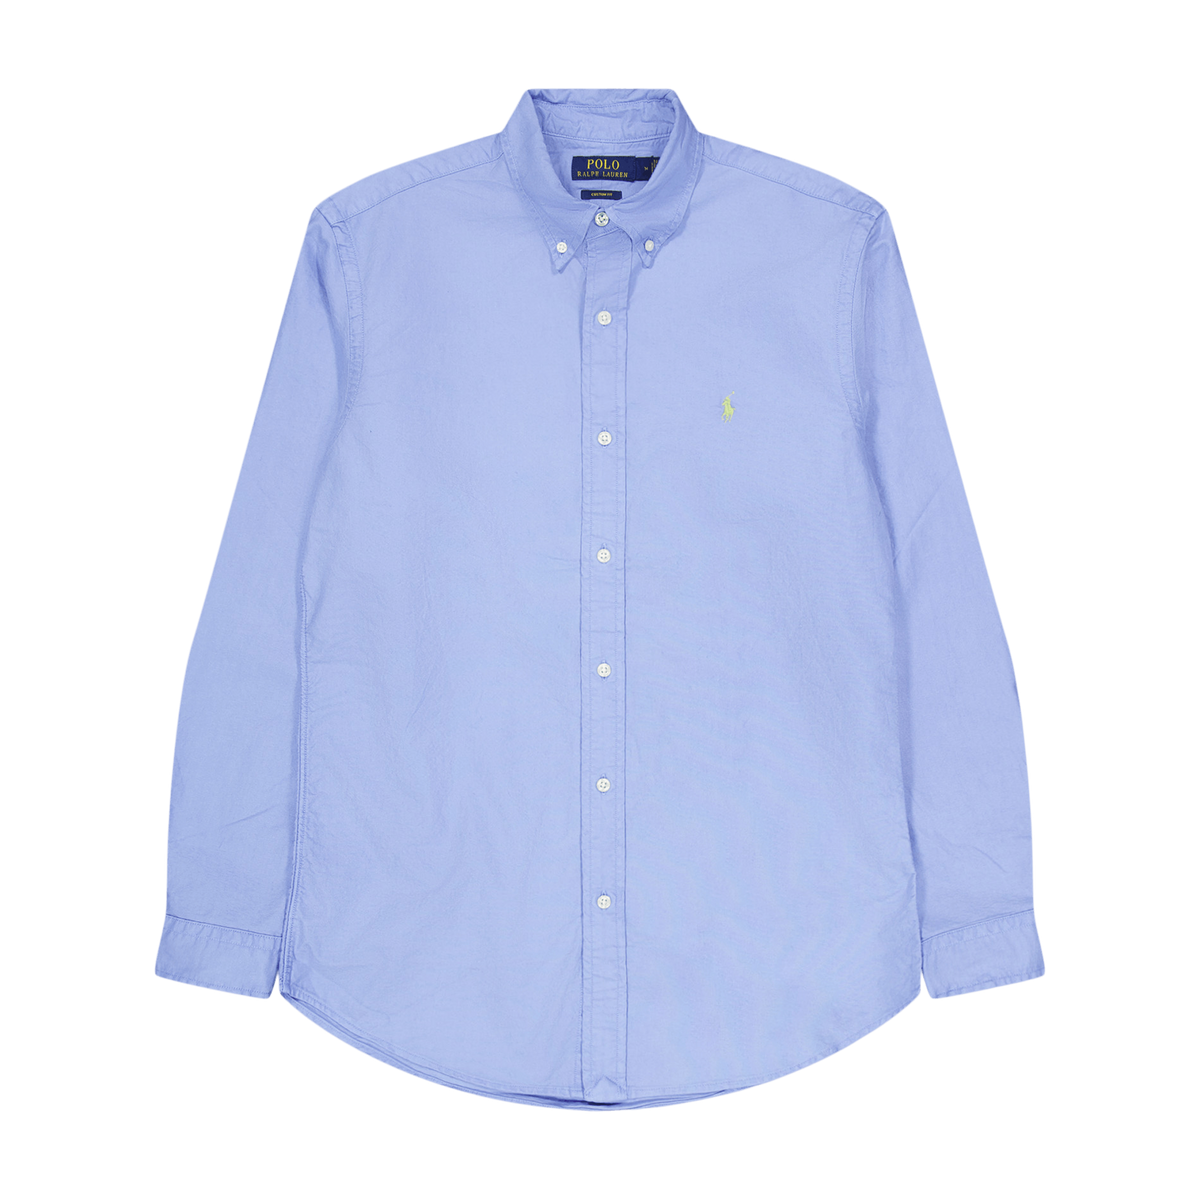 Polo Ralph Lauren Gd Oxford Custom Fit Shirt Harbor Island